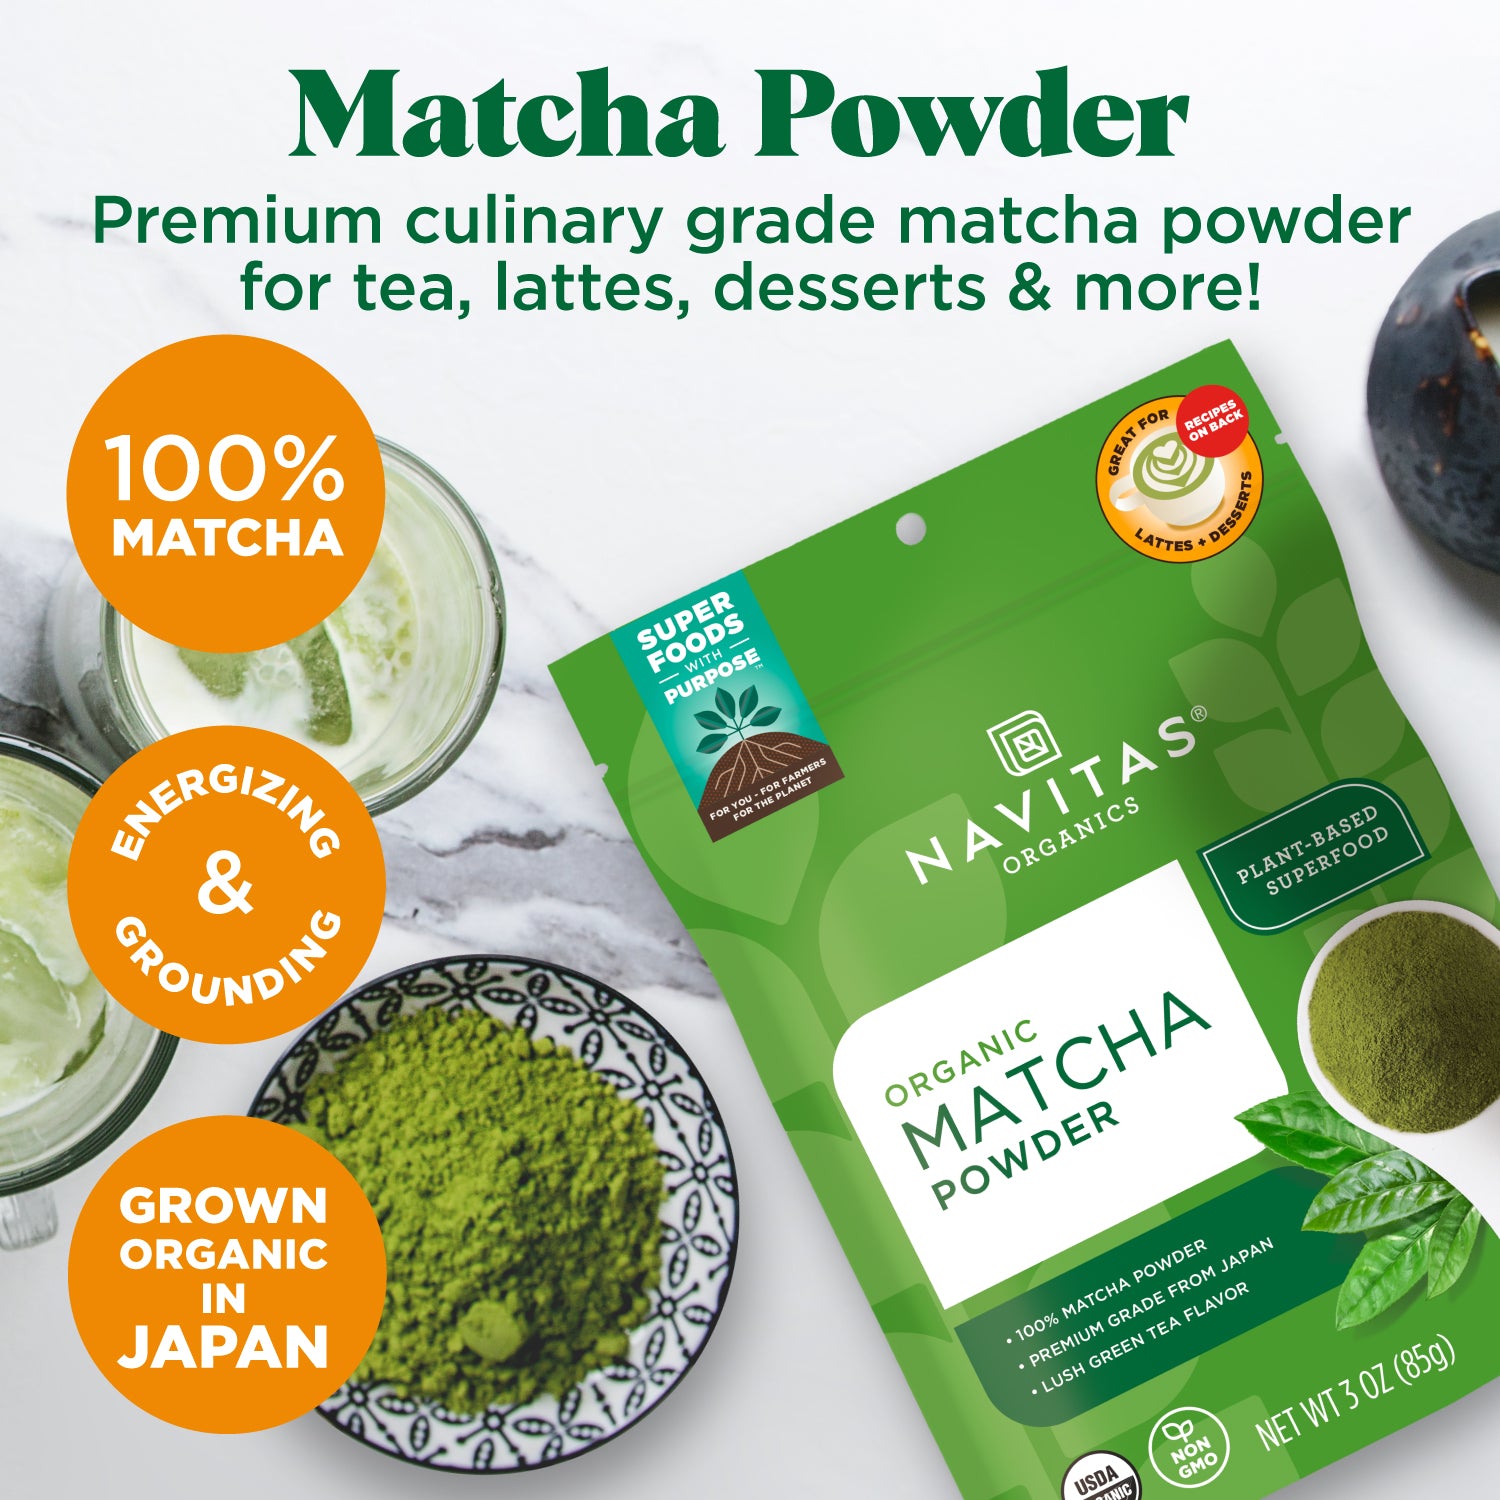 Navitas Organics premium culinary grade matcha powder can be used for tea, lattes, desserts and more!